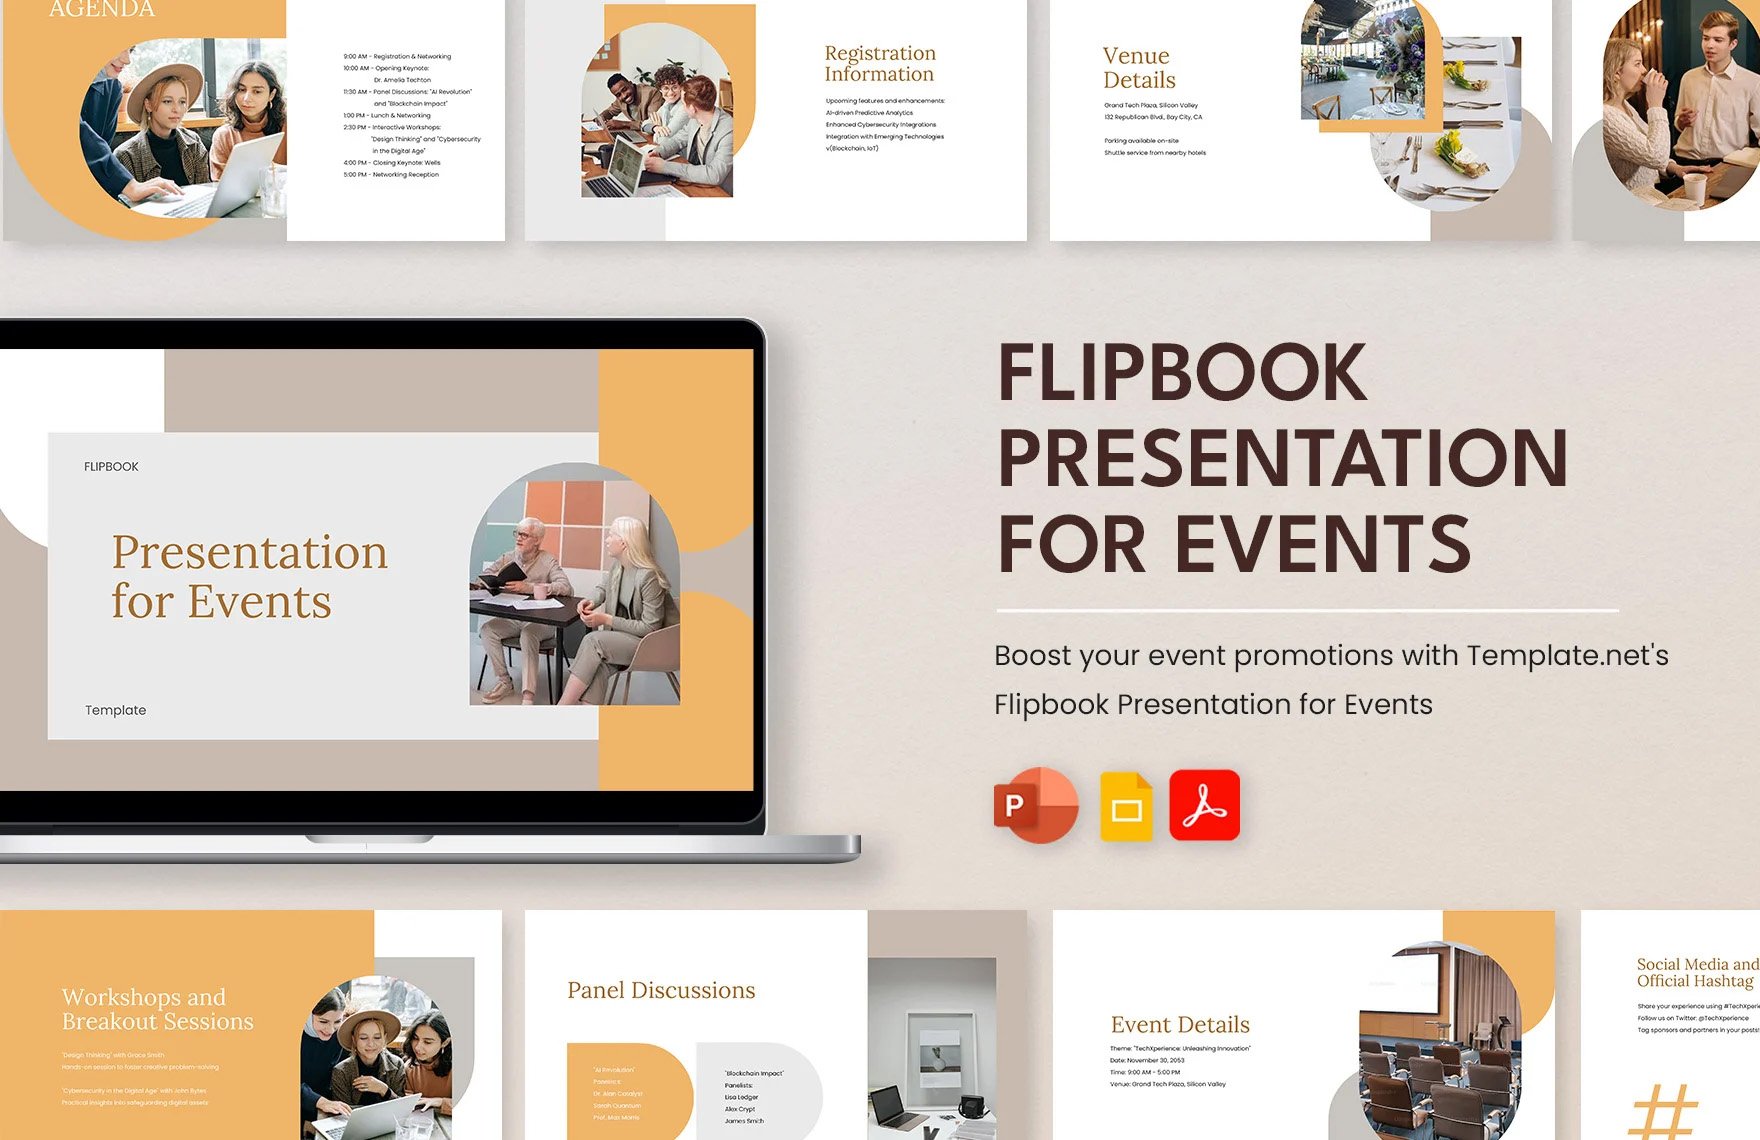 Flipbook Presentation for Events